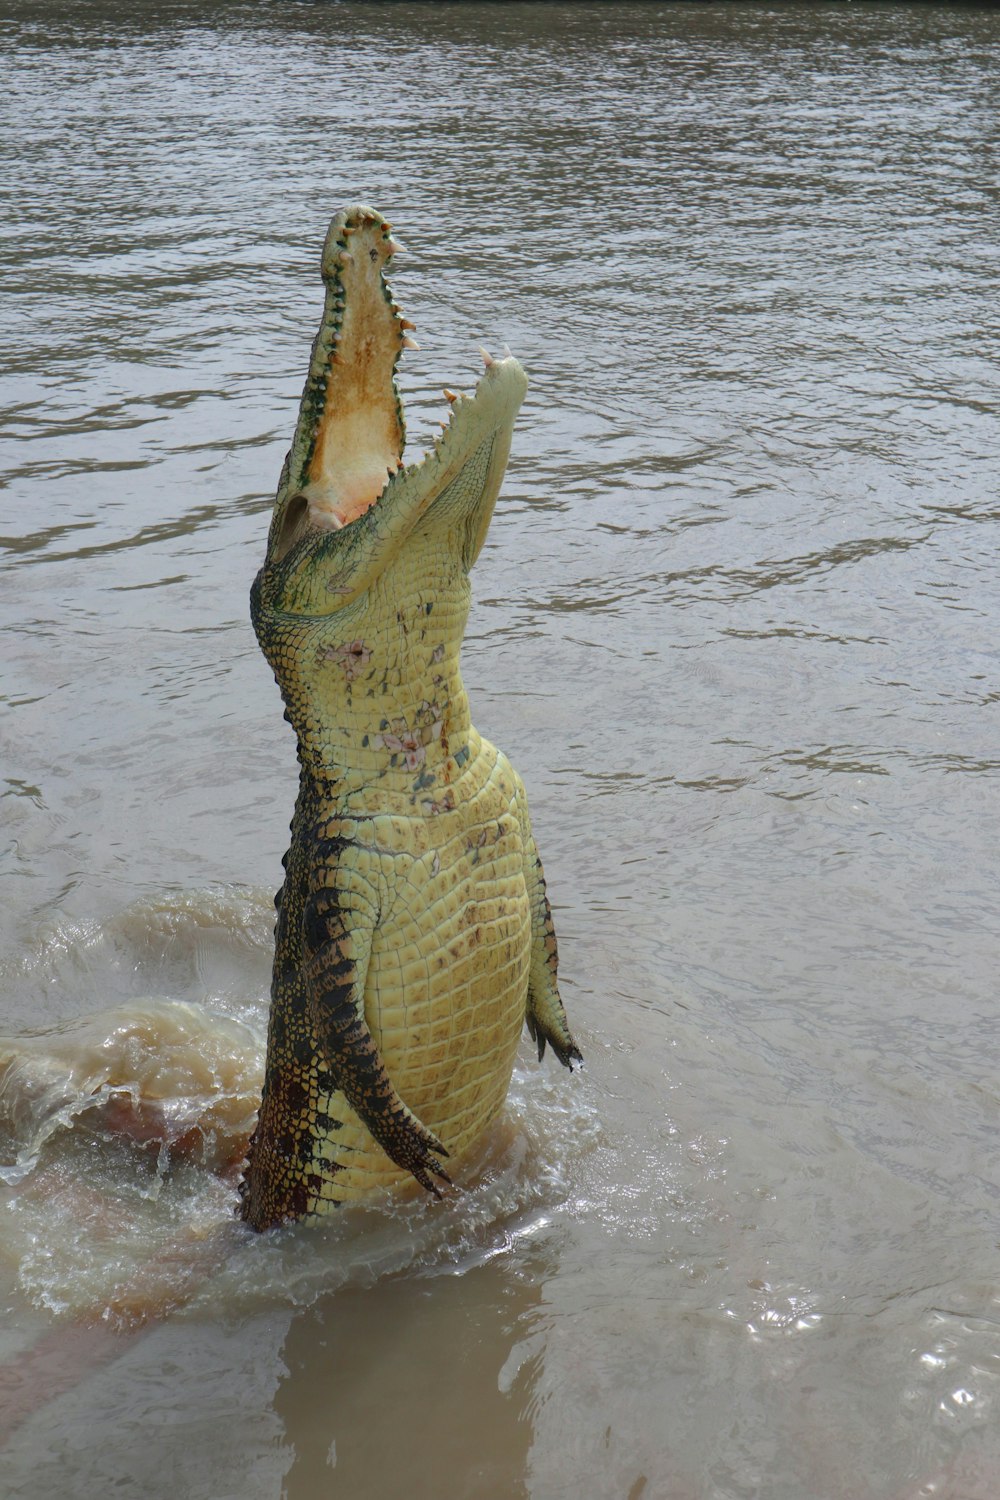 Brown alligator on body of water photo – Free Australia Image on Unsplash